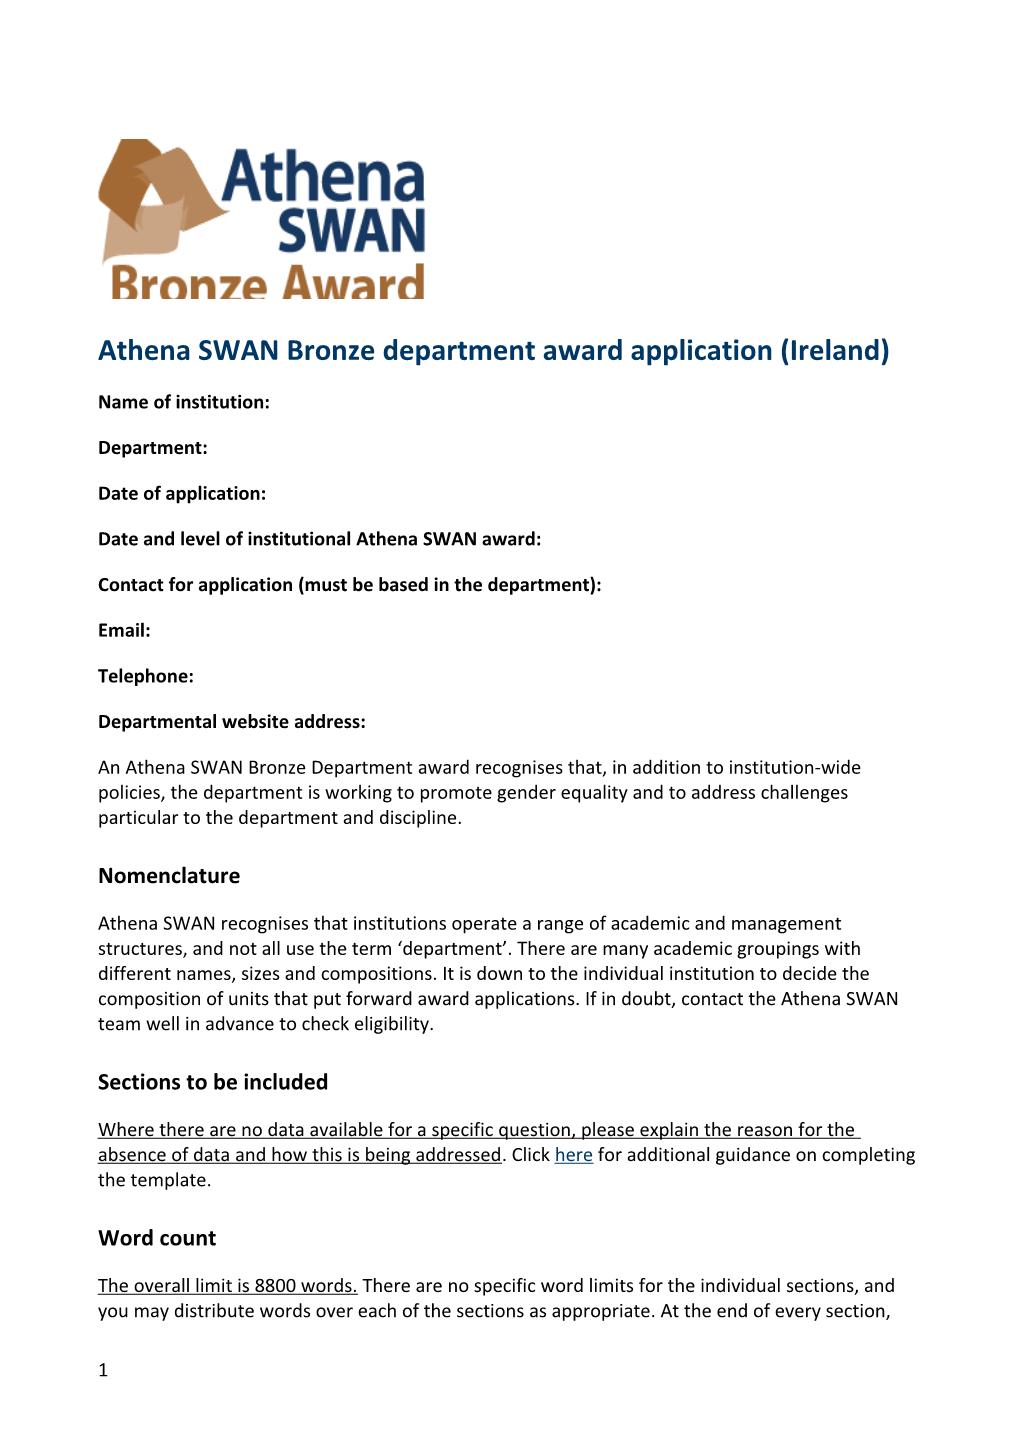 Athena SWAN Bronze Department Award Application (Ireland)